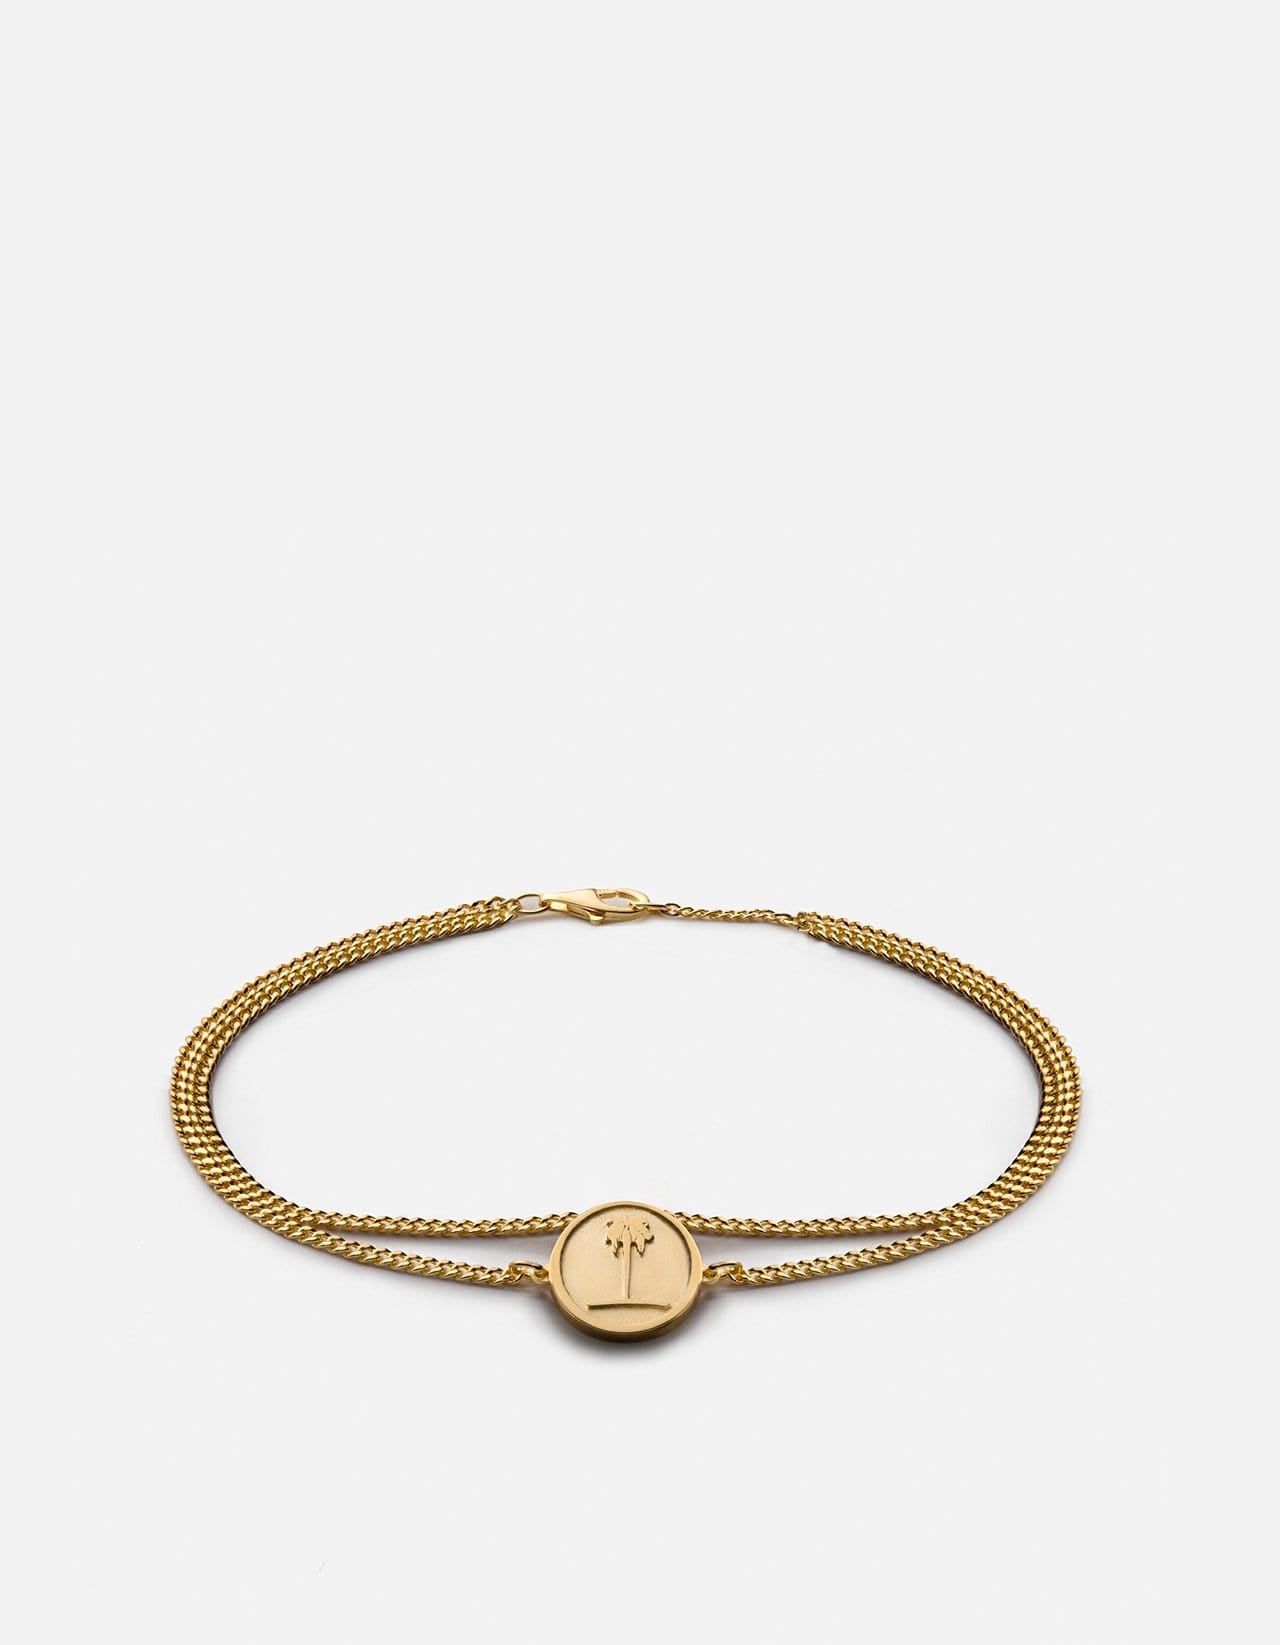 Palm Tree Bracelet, Gold Vermeil | Women's Bracelets | Miansai